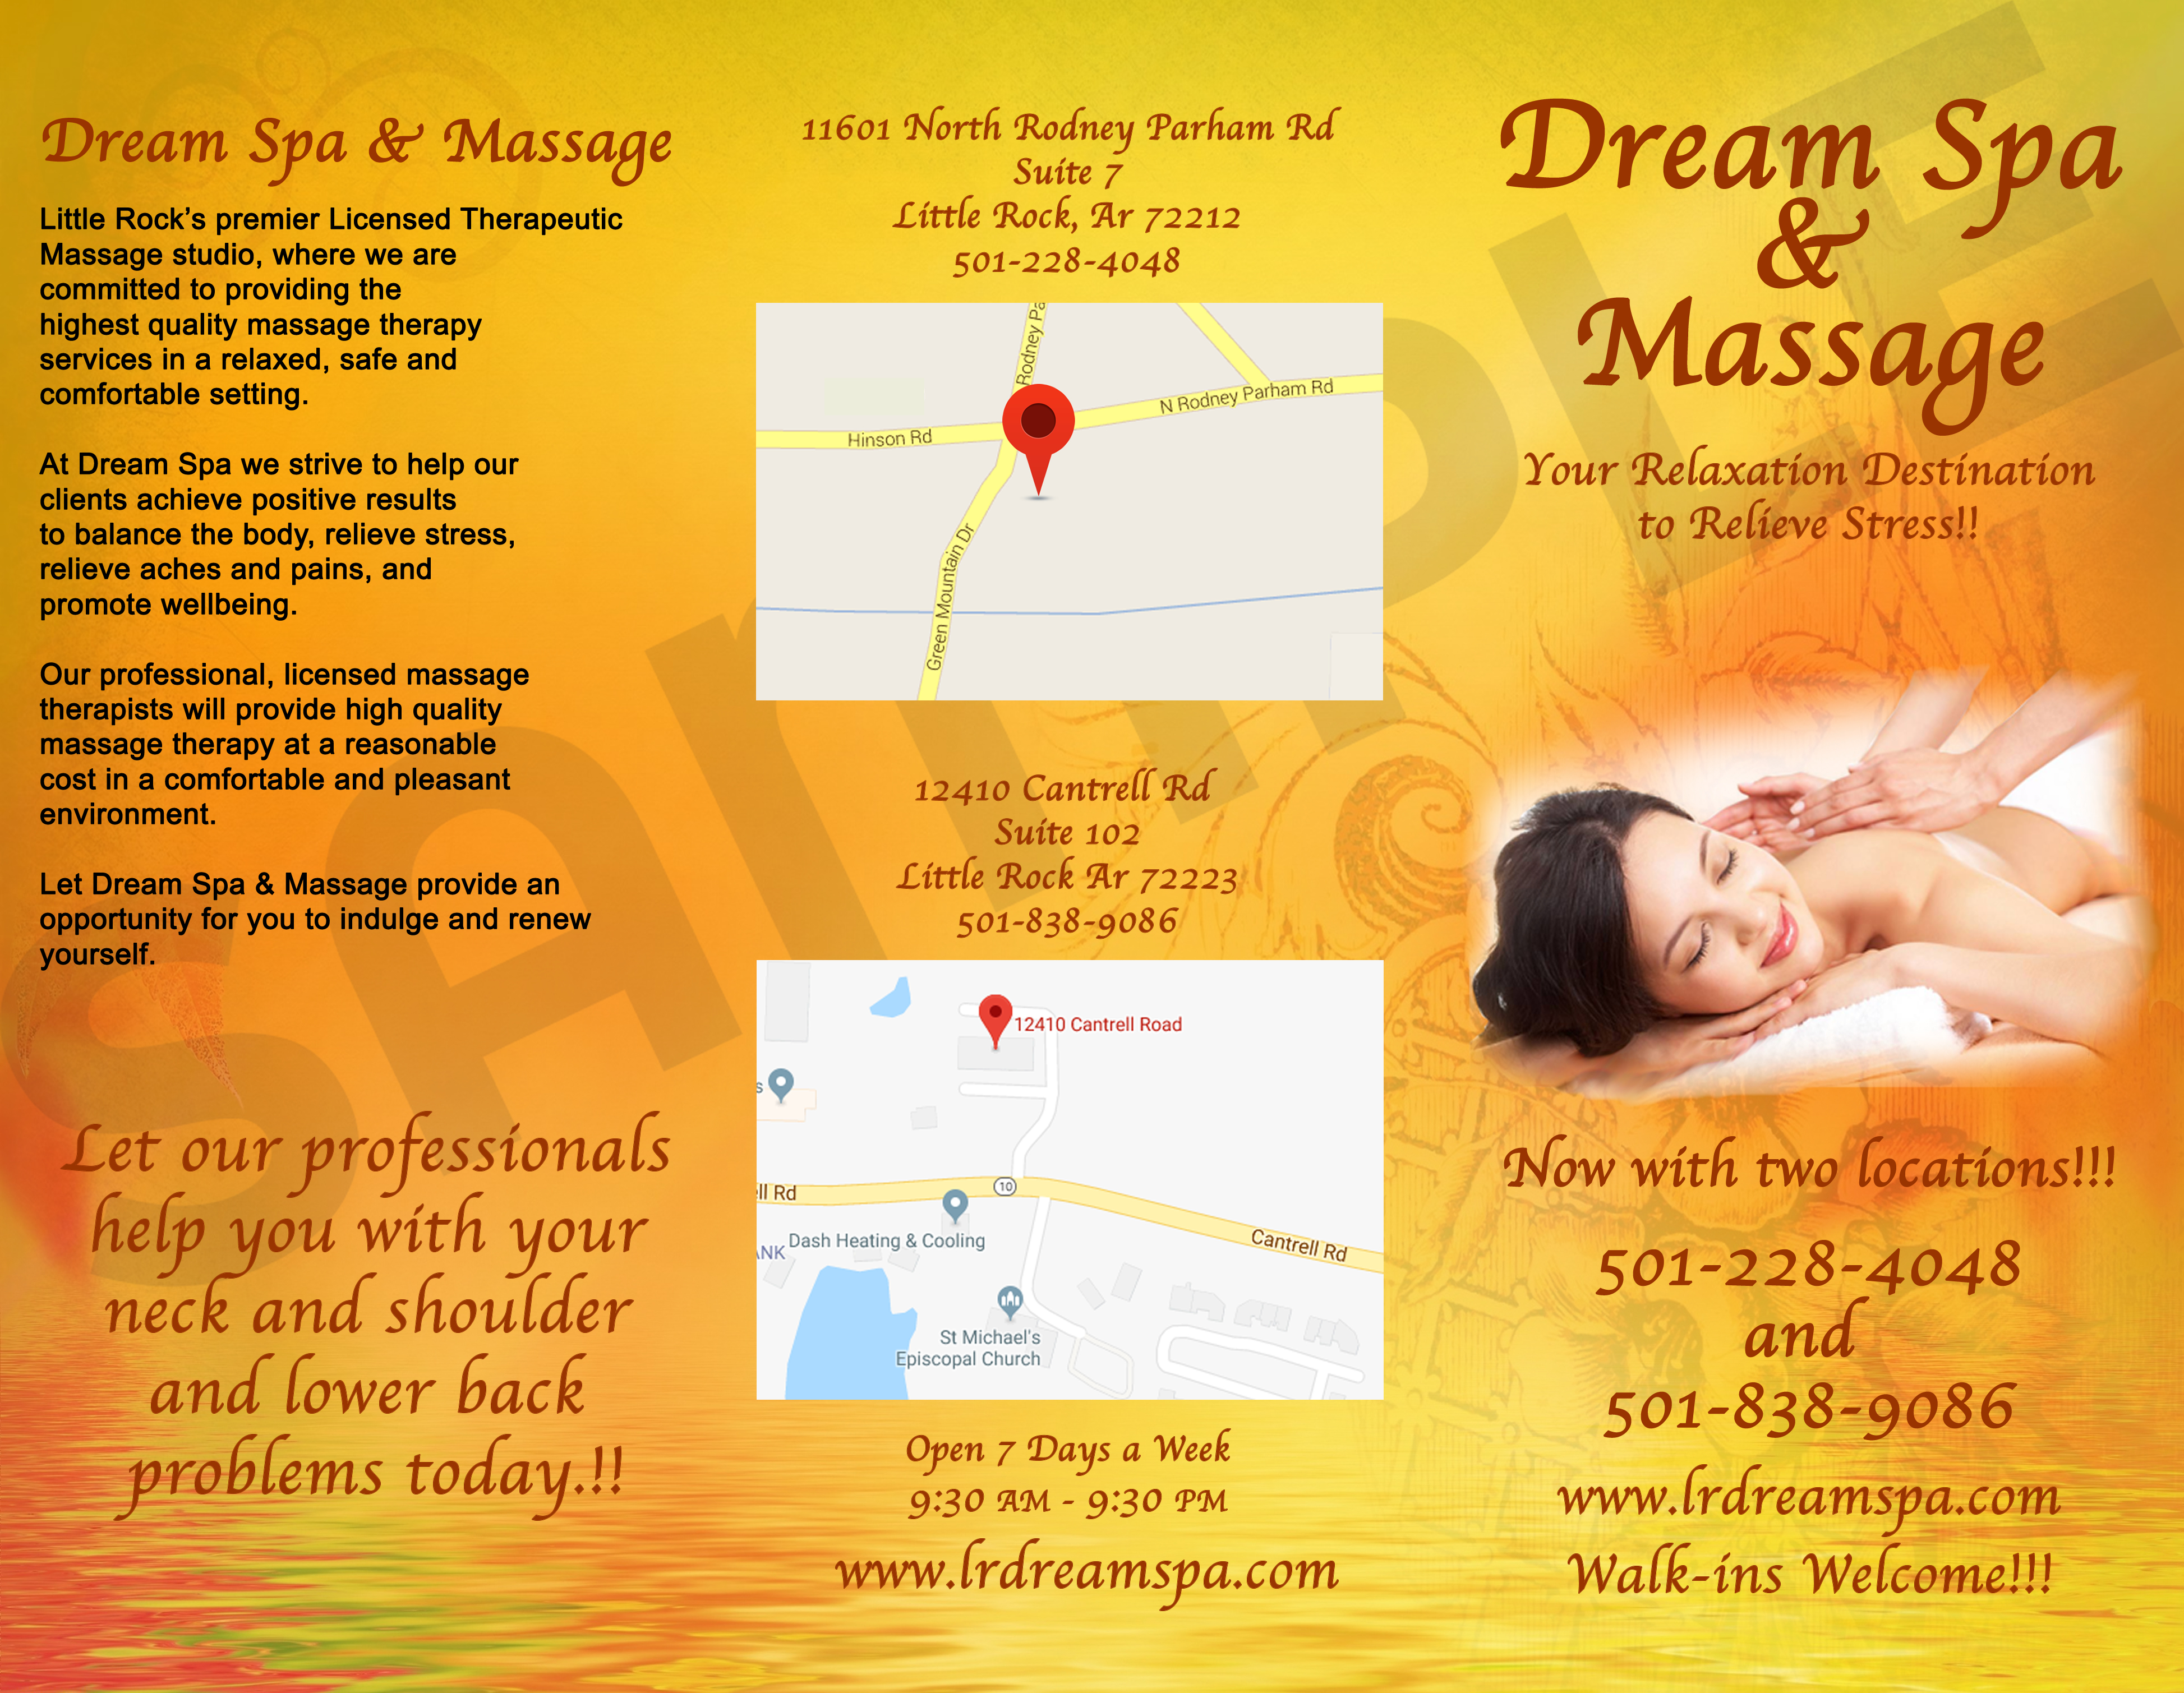 Dream Spa & Massage Photo